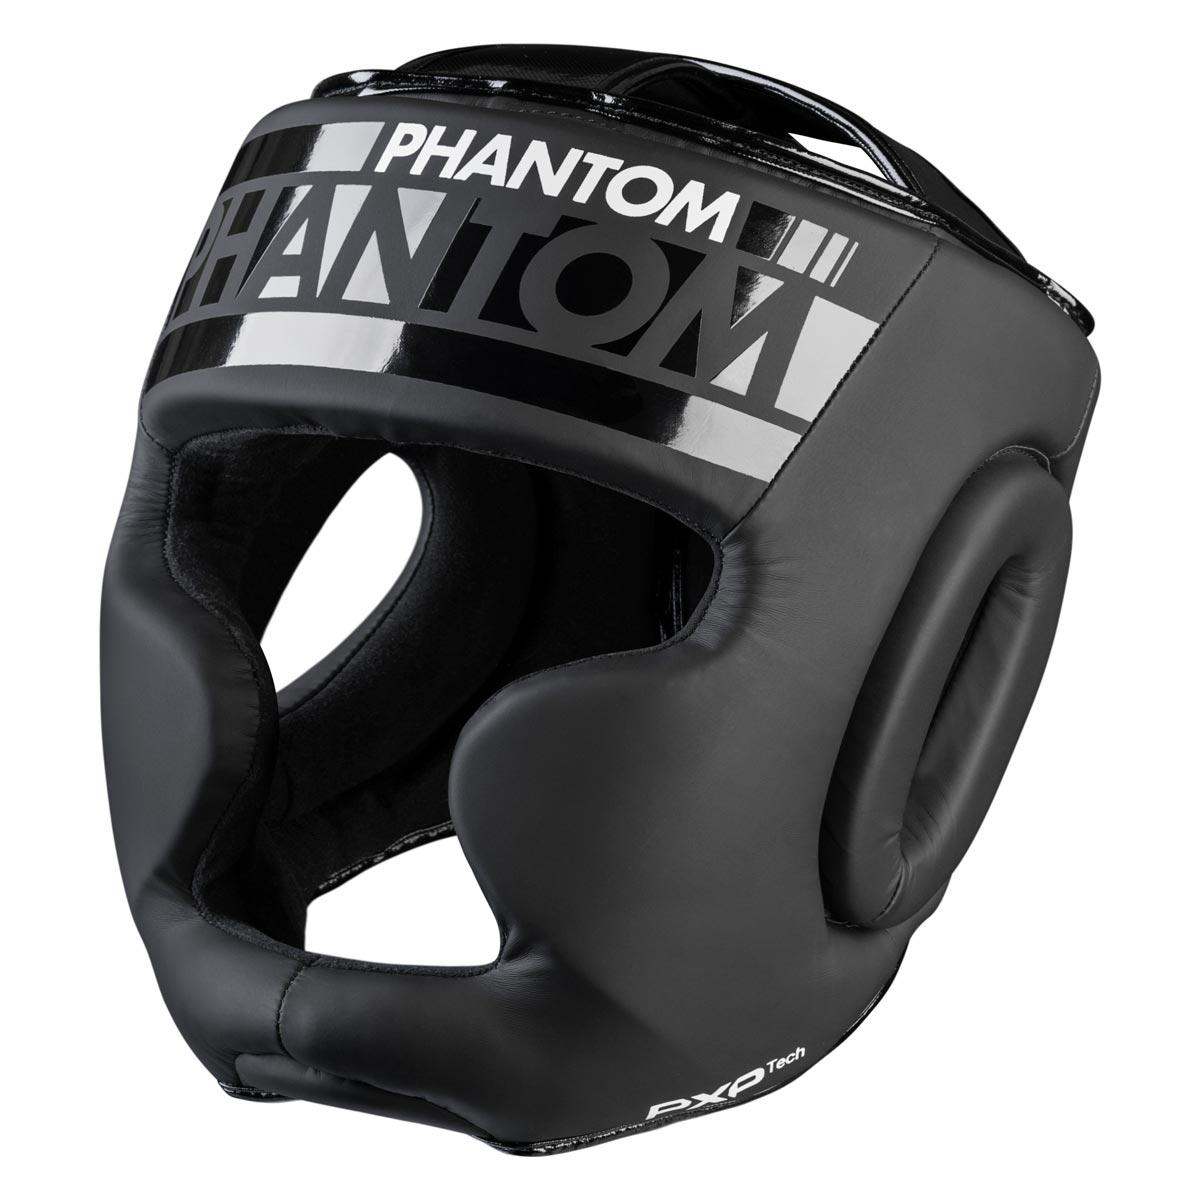 Der Phantom Full Face Kopfschutz für Kampfsport